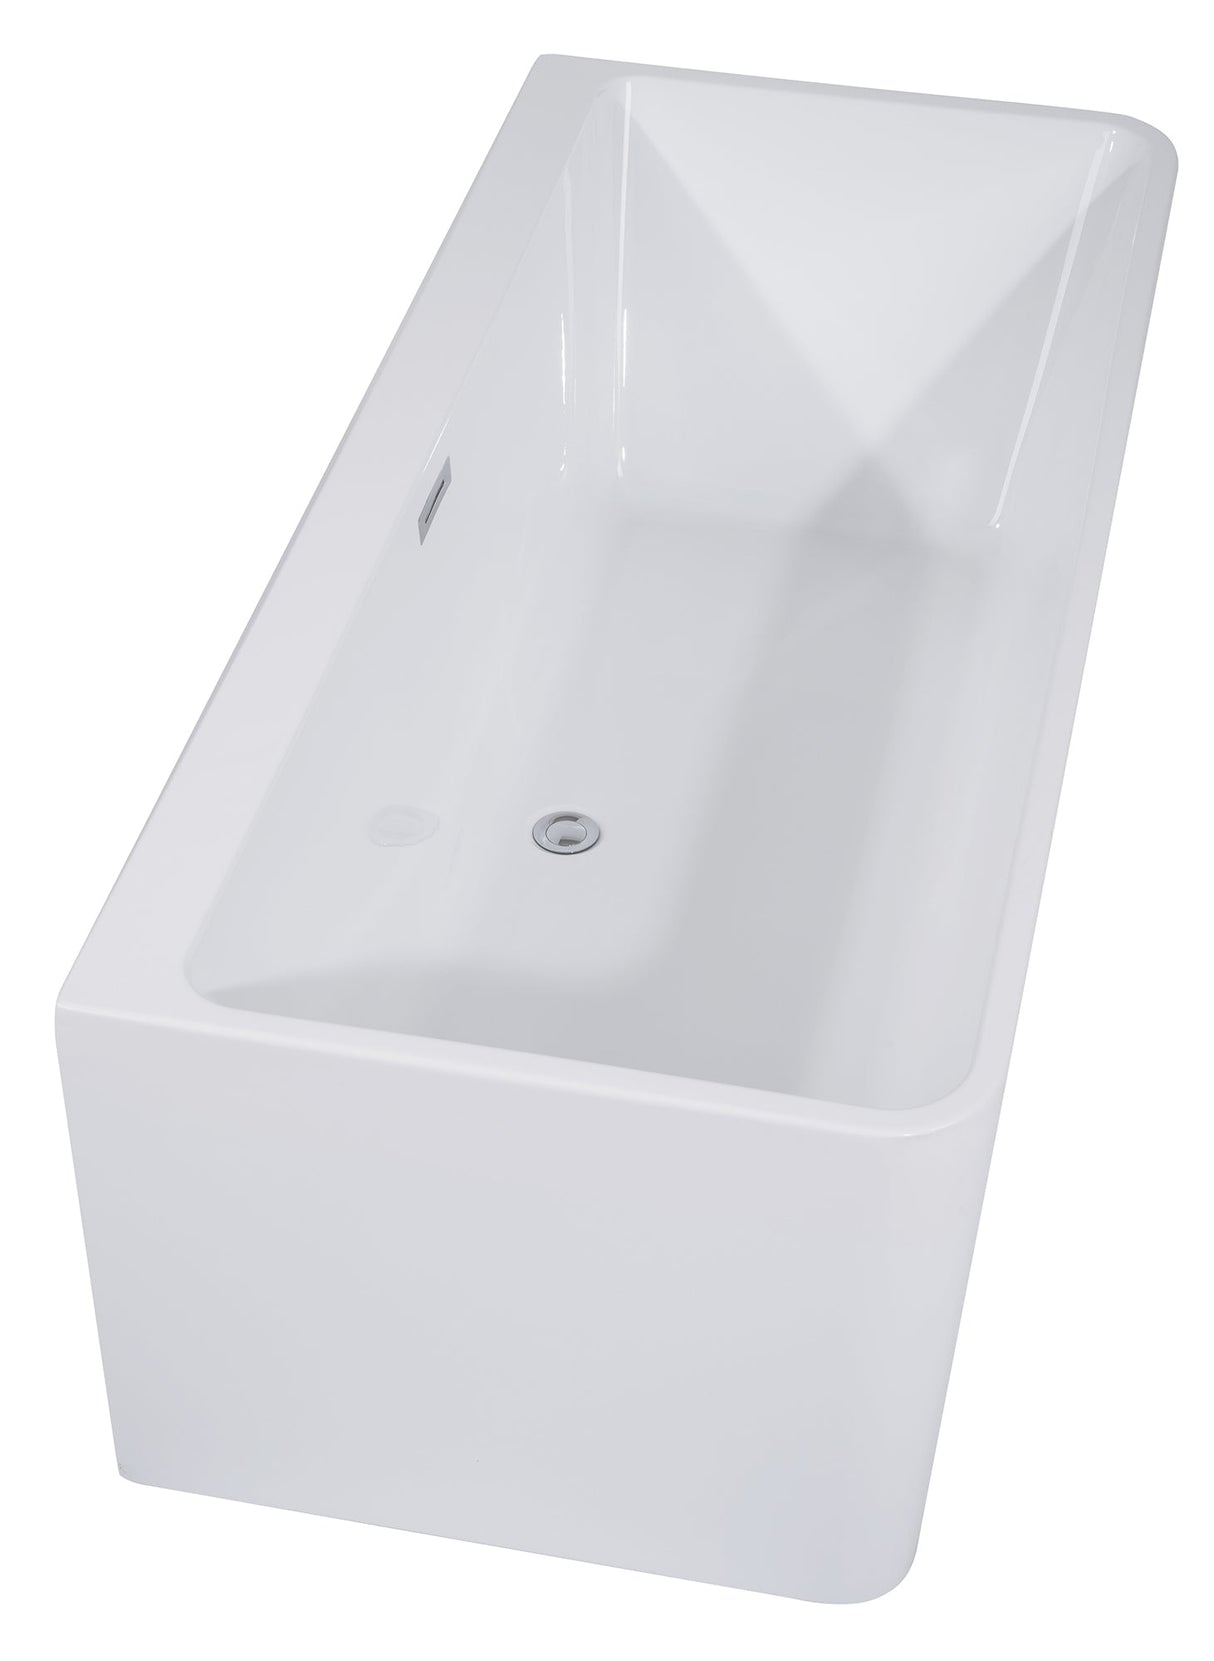 ALFI | AB8858 59 inch White Rectangular Acrylic Free Standing Soaking Bathtub